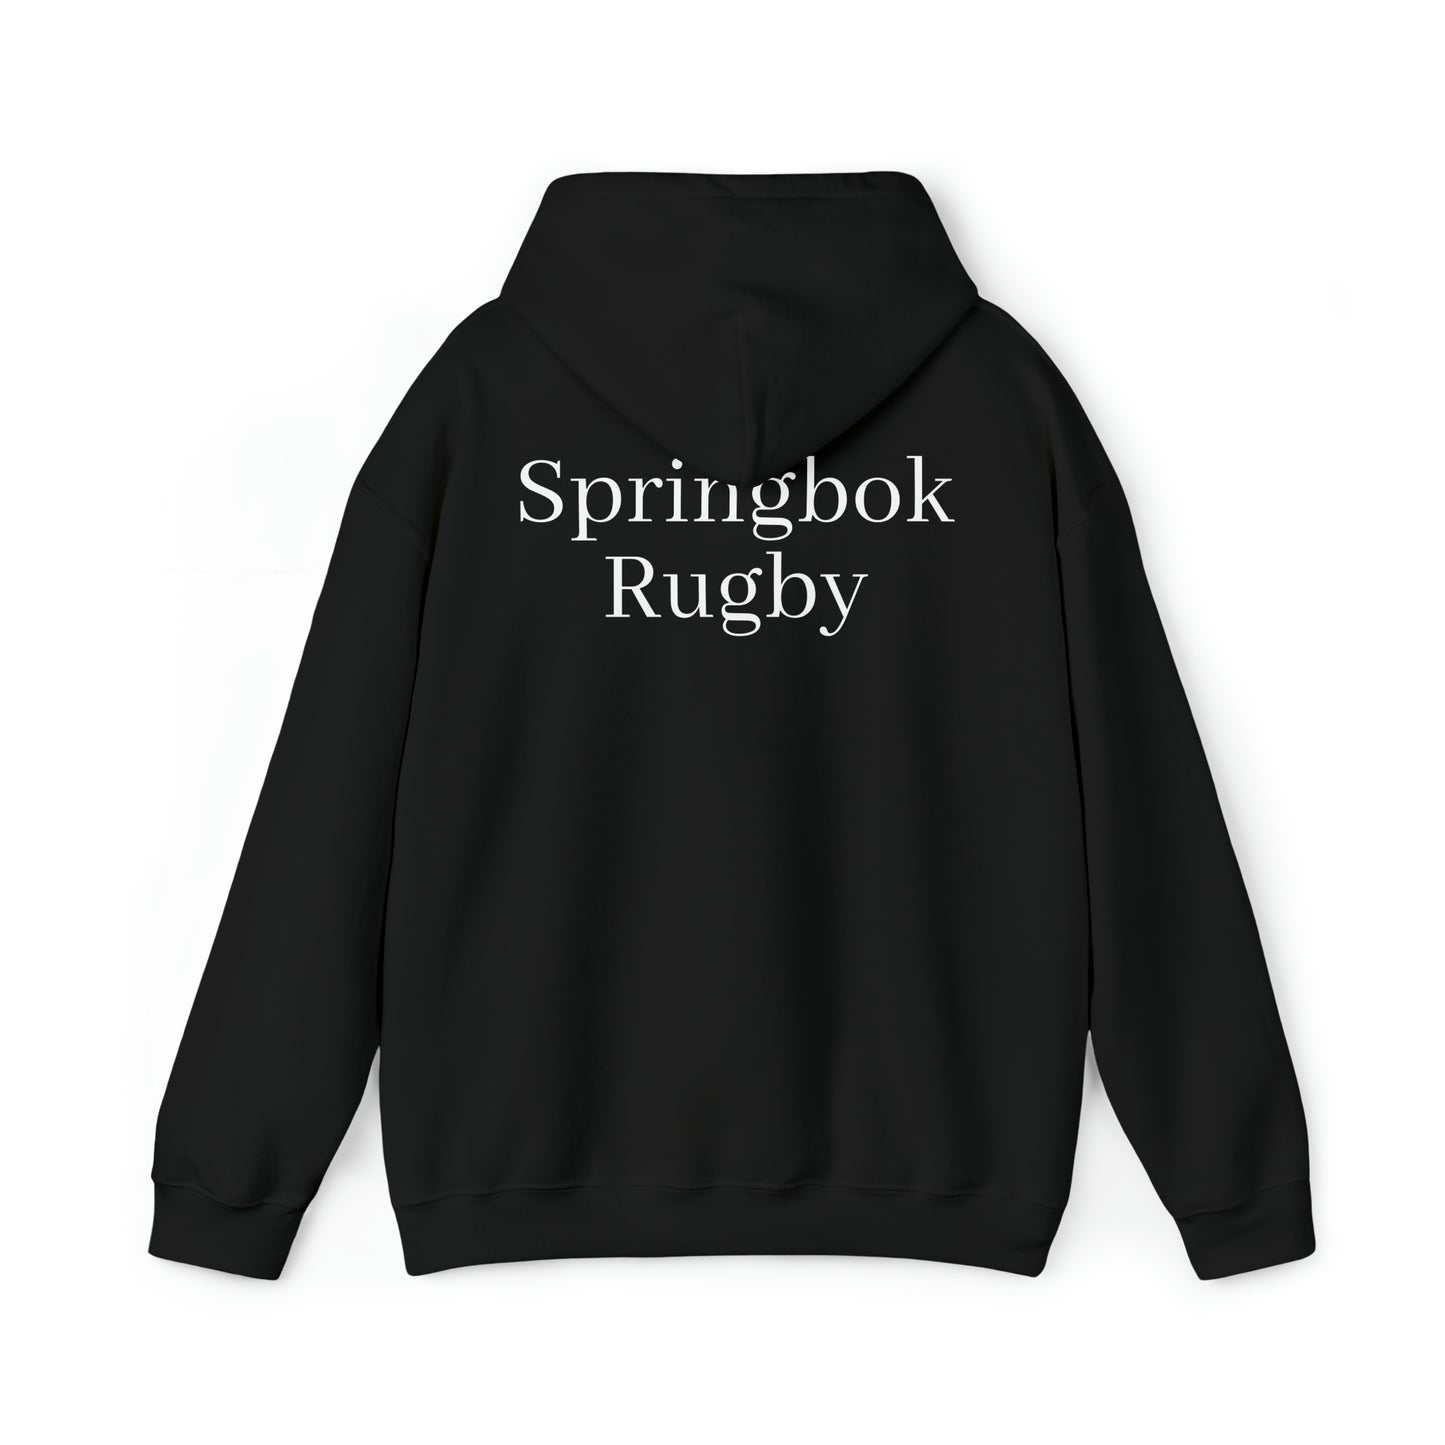 Springboks lifting RWC - dark hoodies